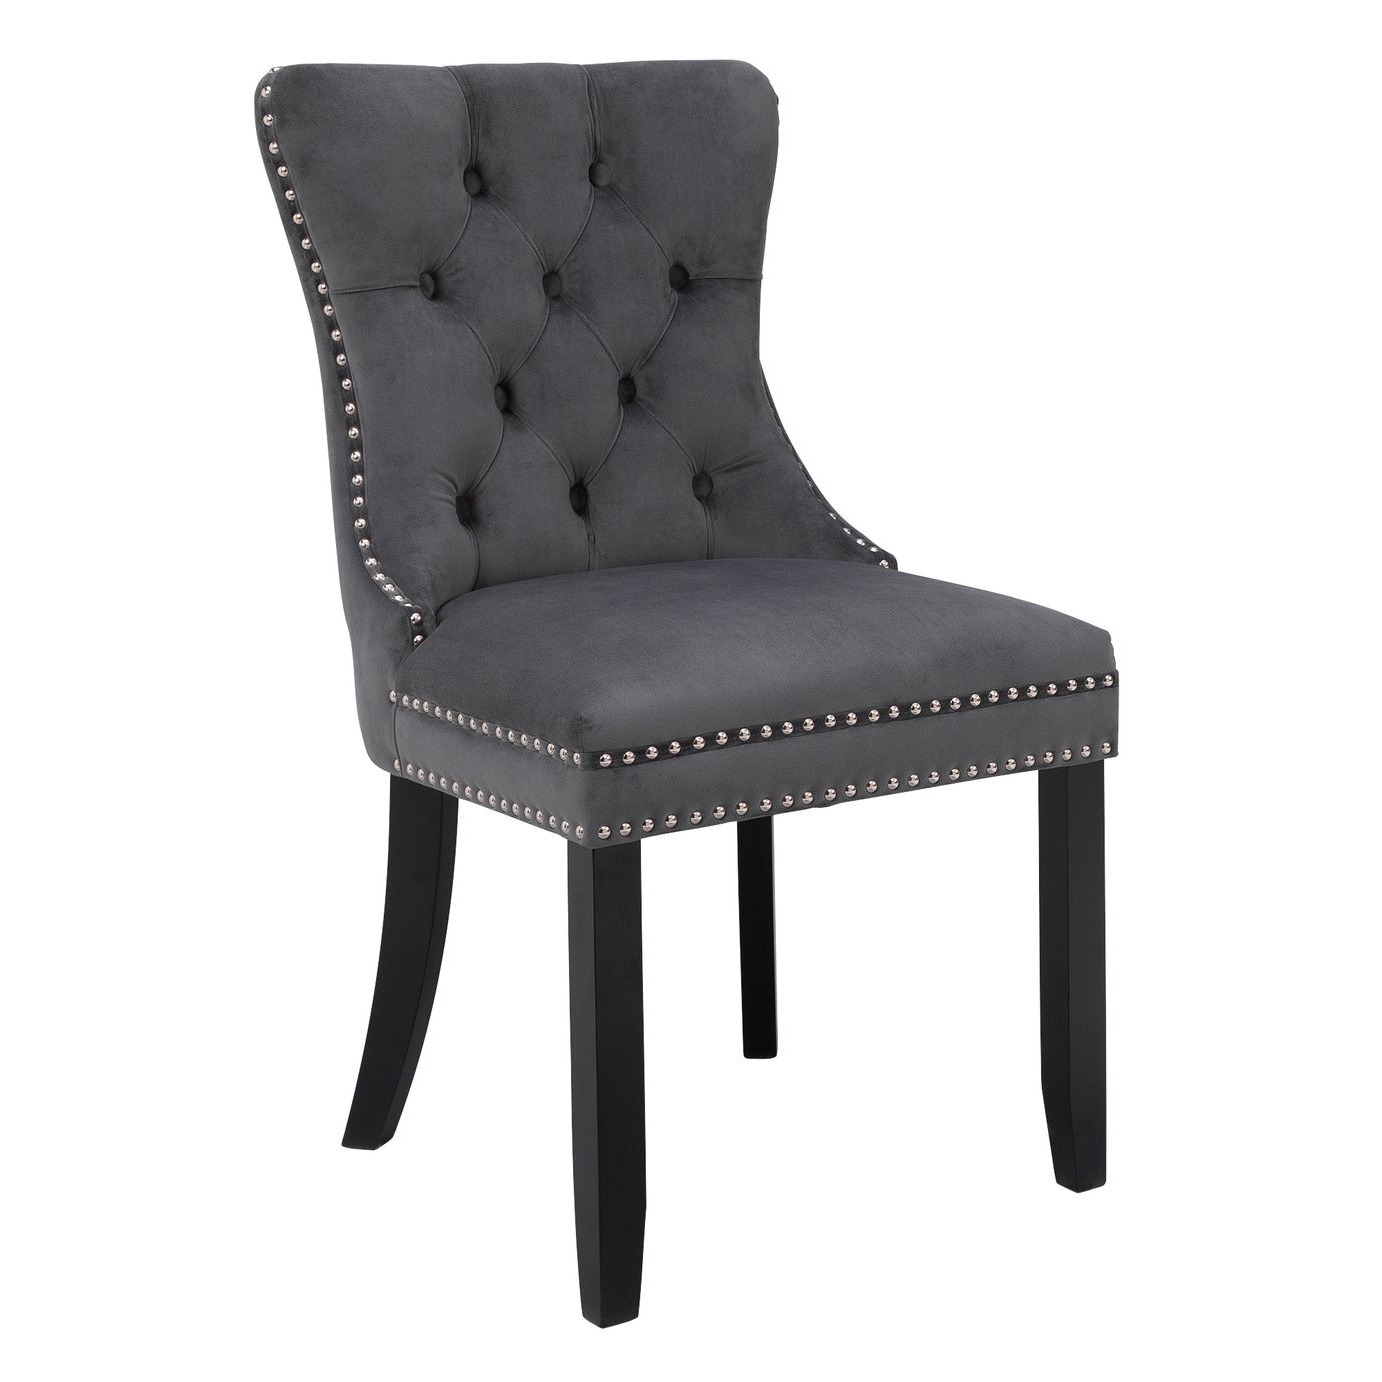 Argos Home Princess Velvet Dining Chair - Charcoal - image 1